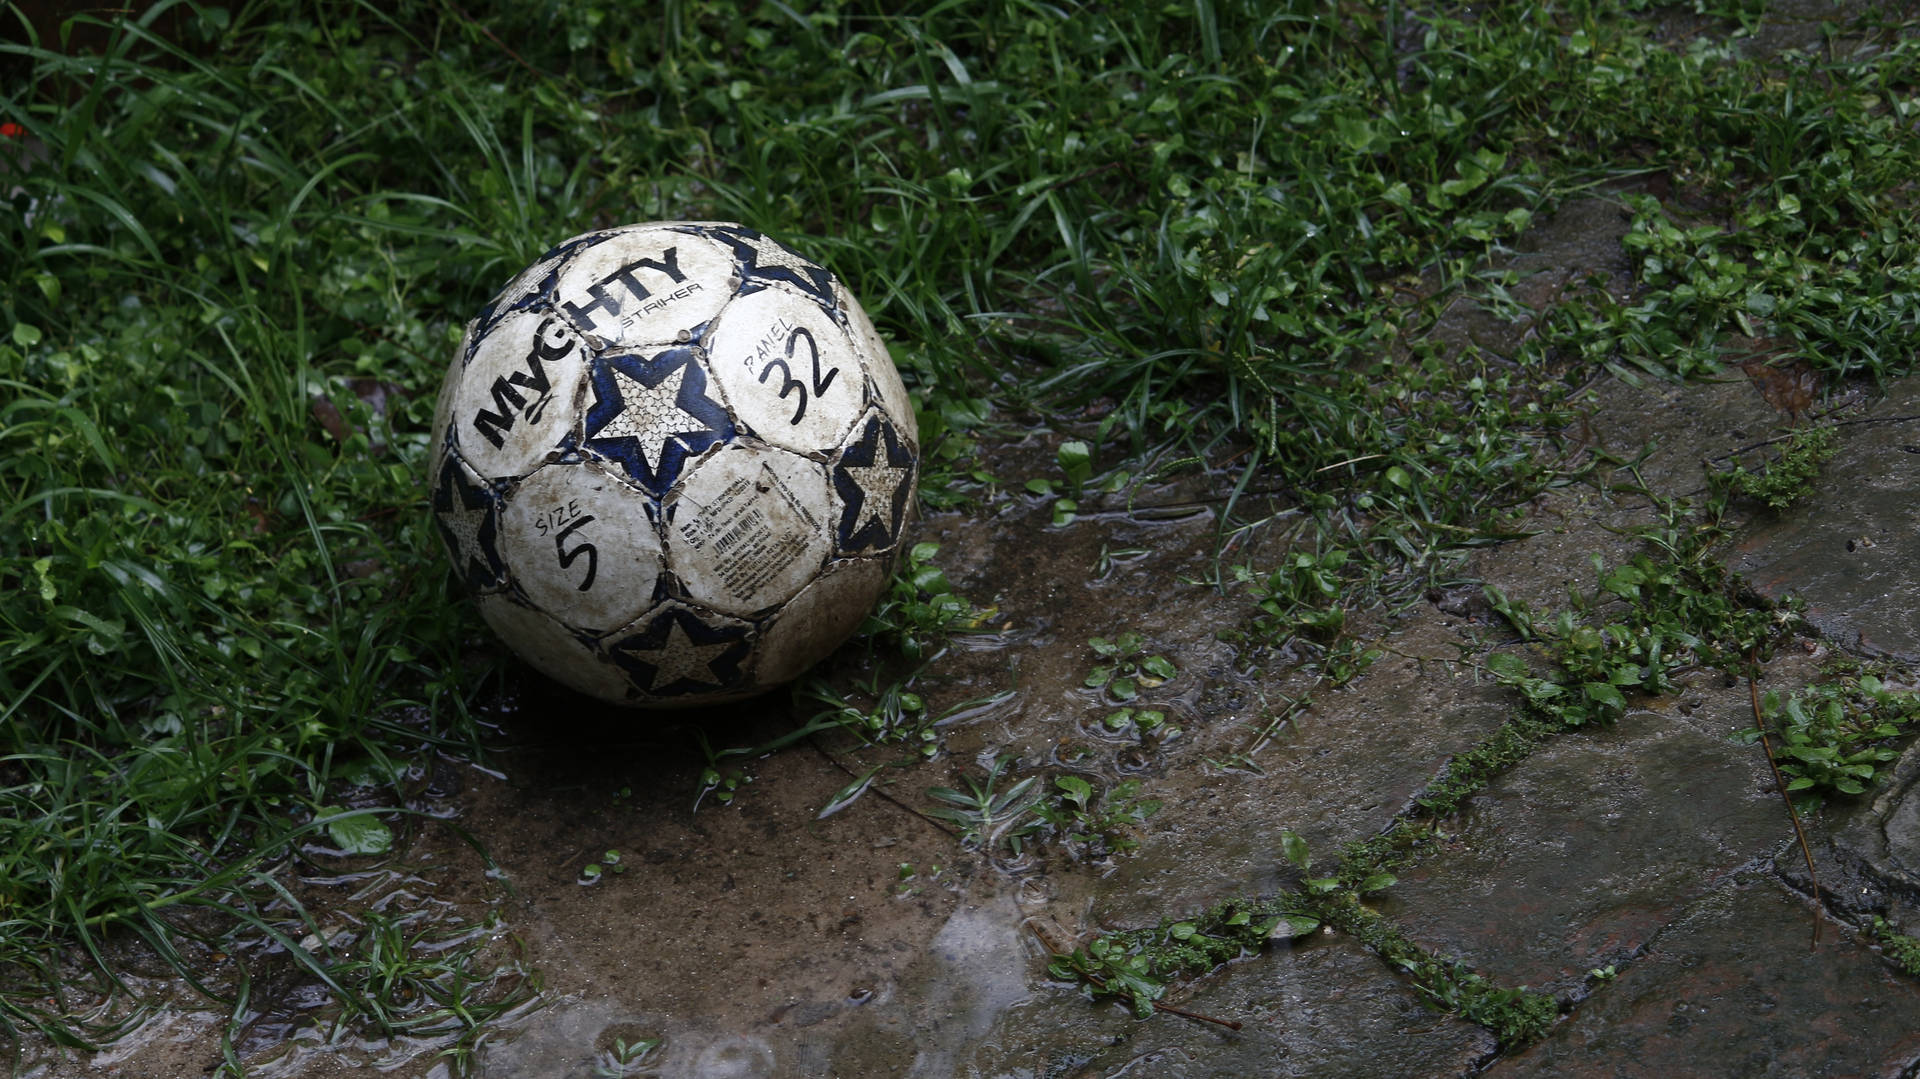 Muddy Football In Grass Background